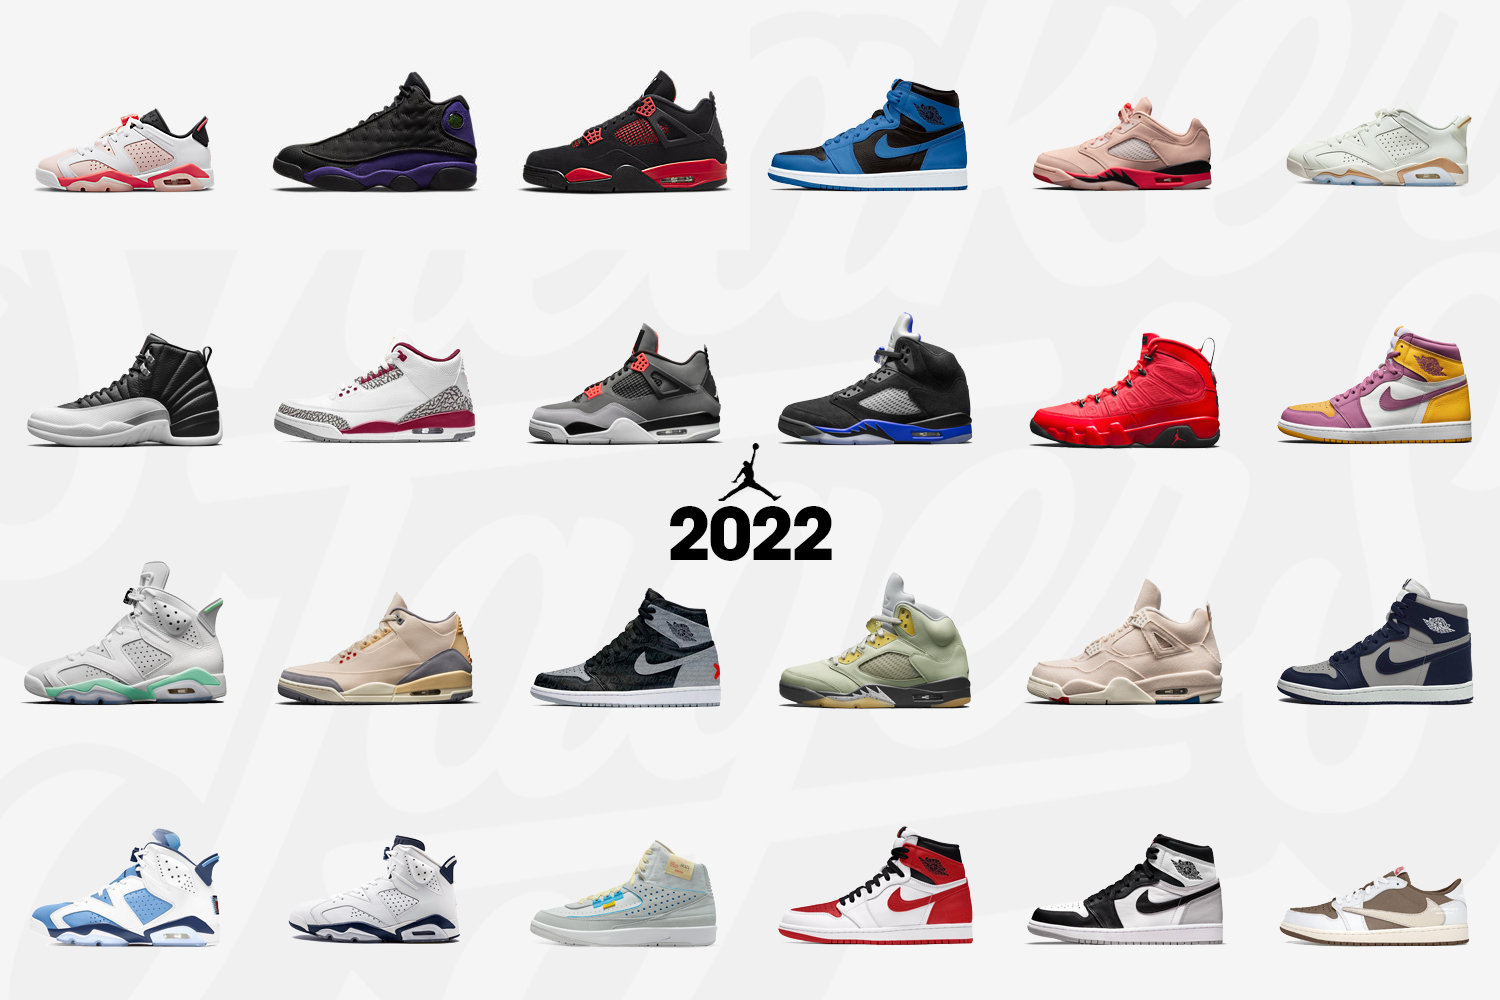 De Air Jordan Retro Releases van 2022